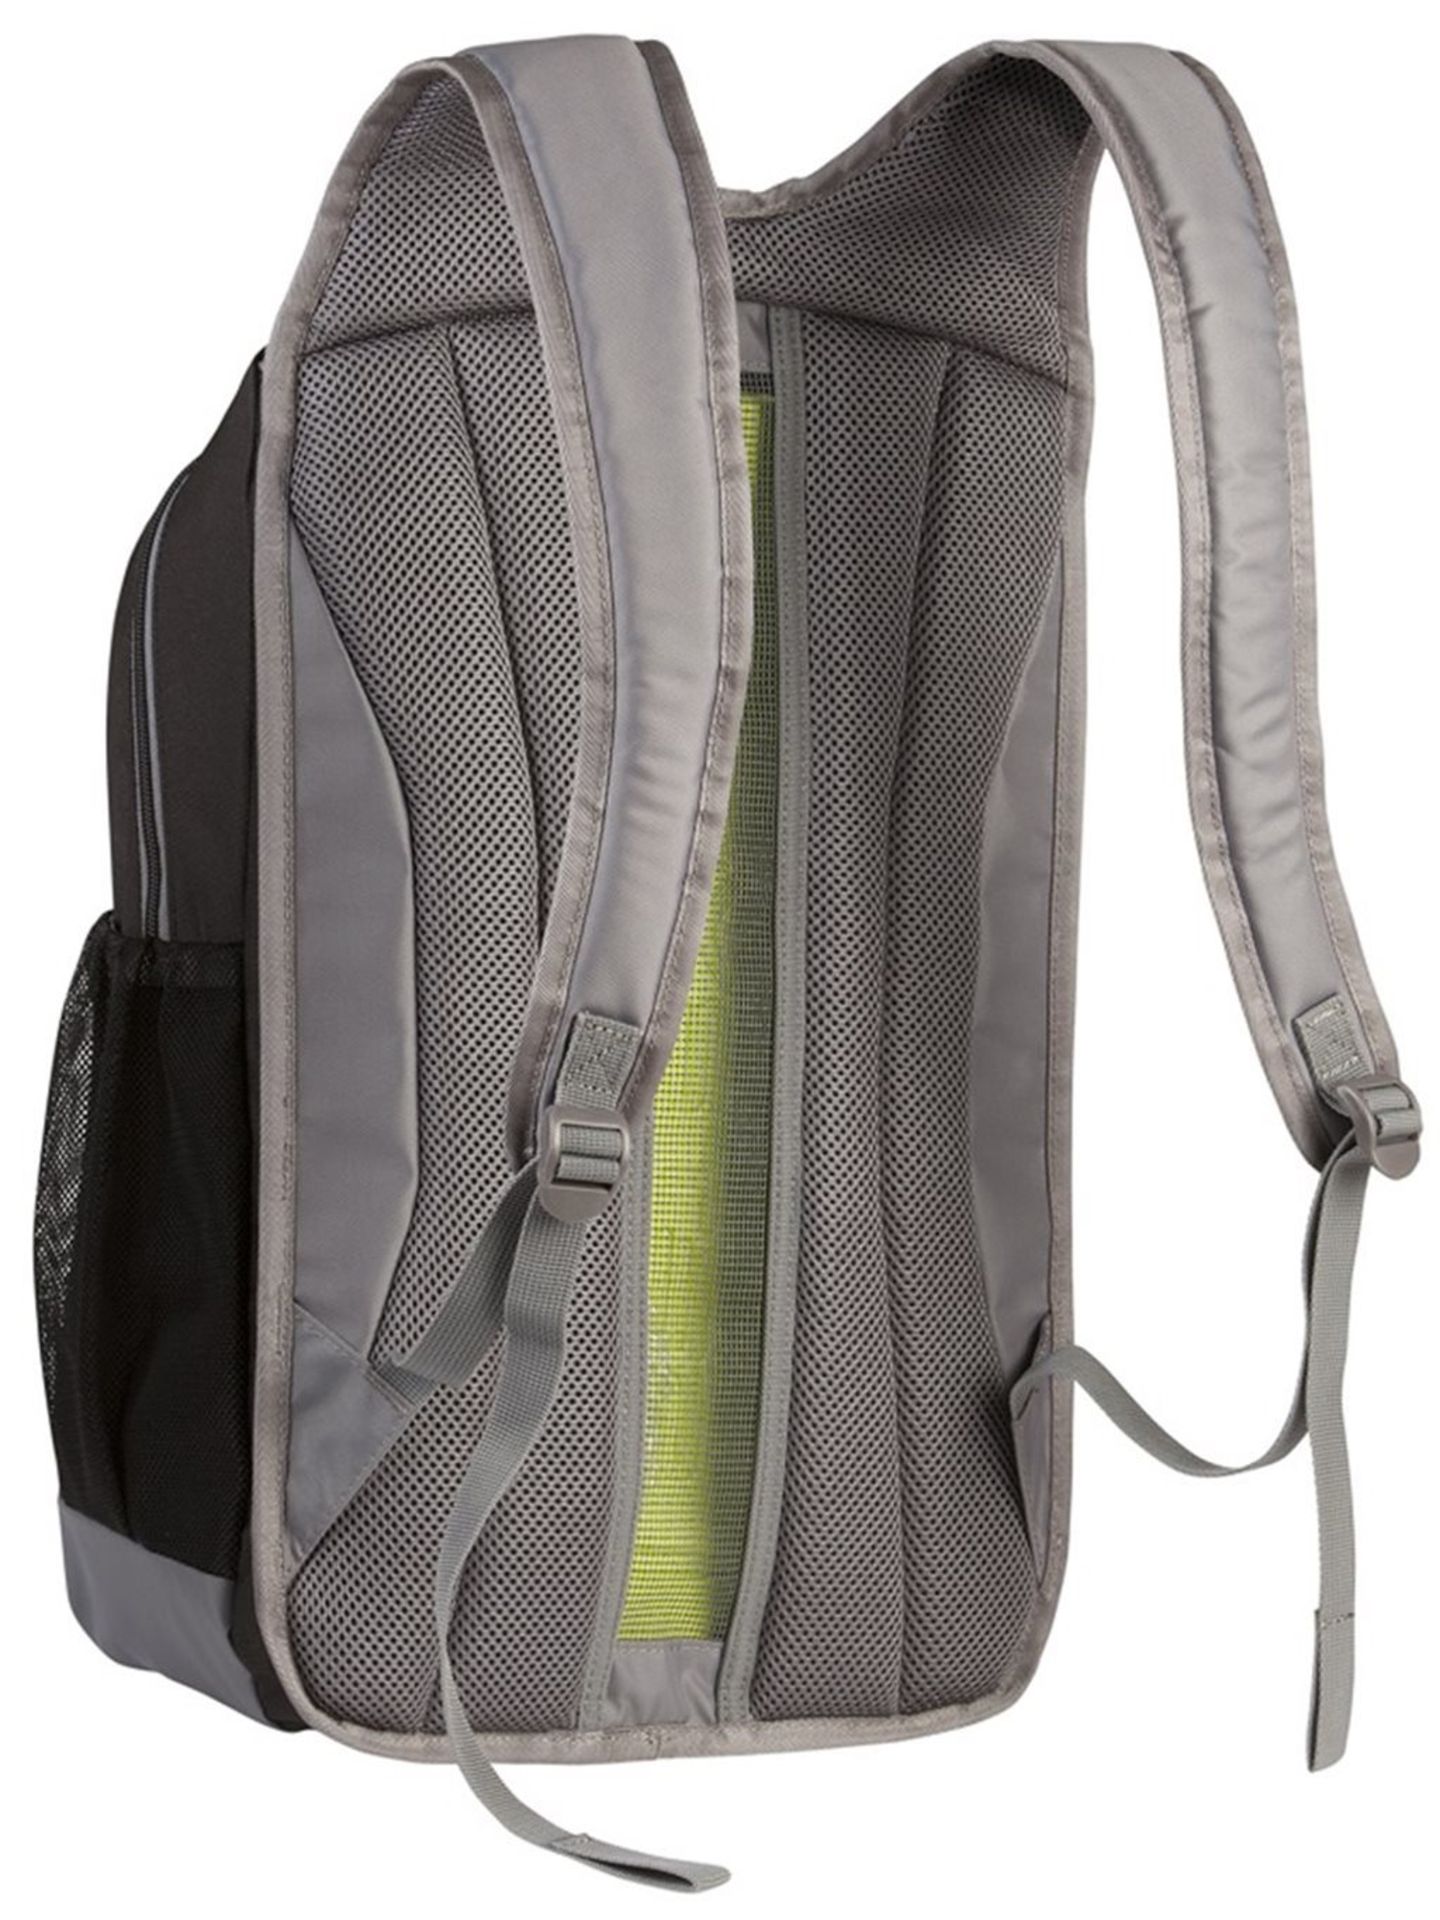 Pallet Of 80x New, Black High End Backpacks - Image 2 of 5